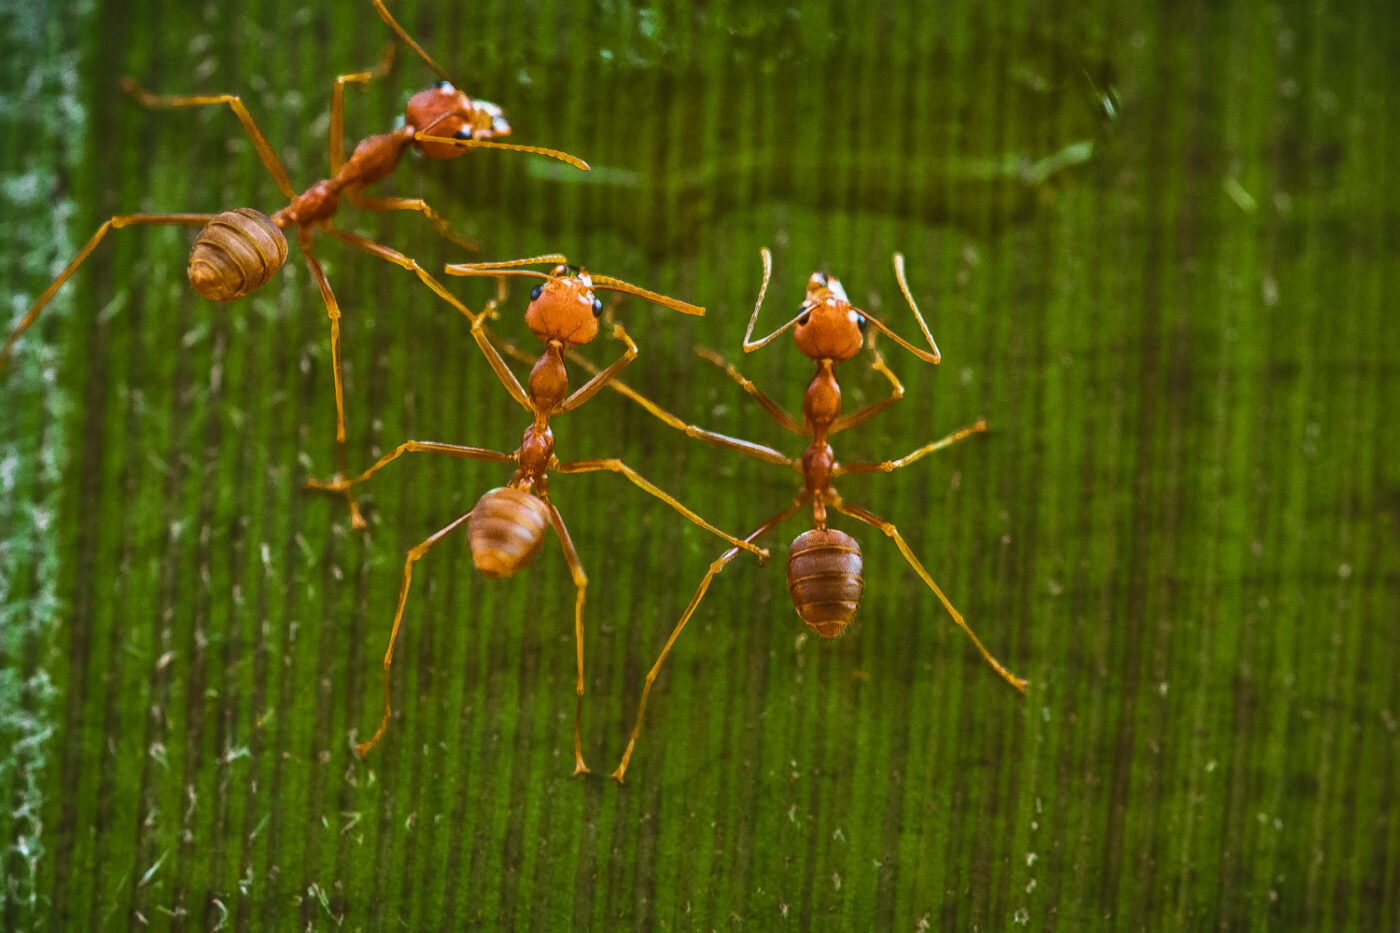 Weaver ants Oecophylla smaragdina